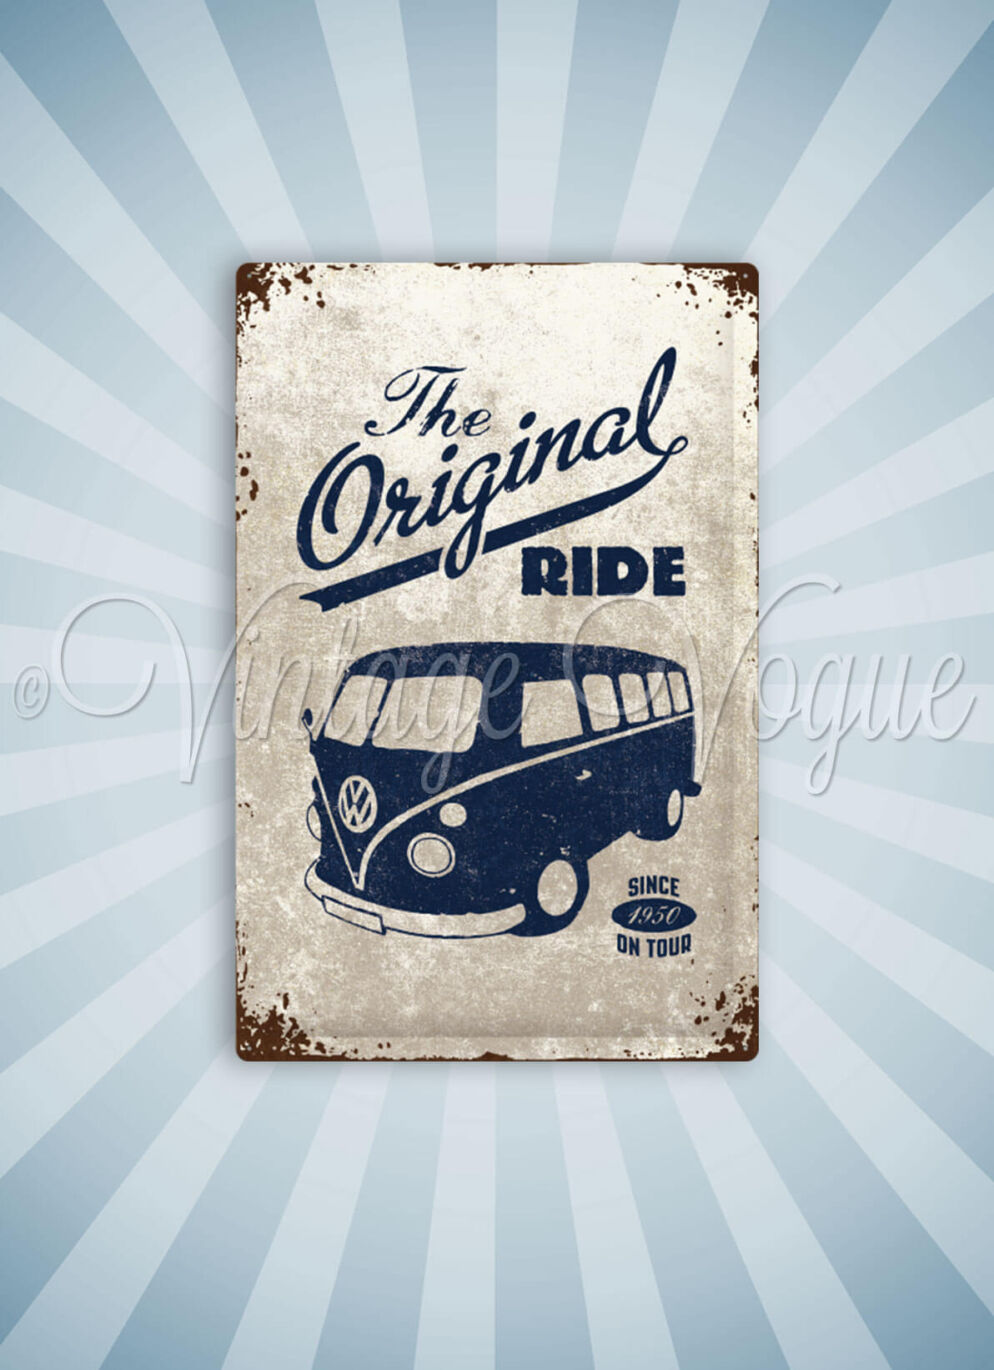 Nostalgic Art Retro Blechschild VW Bulli The Original Ride cm weiß grau creme blau navy